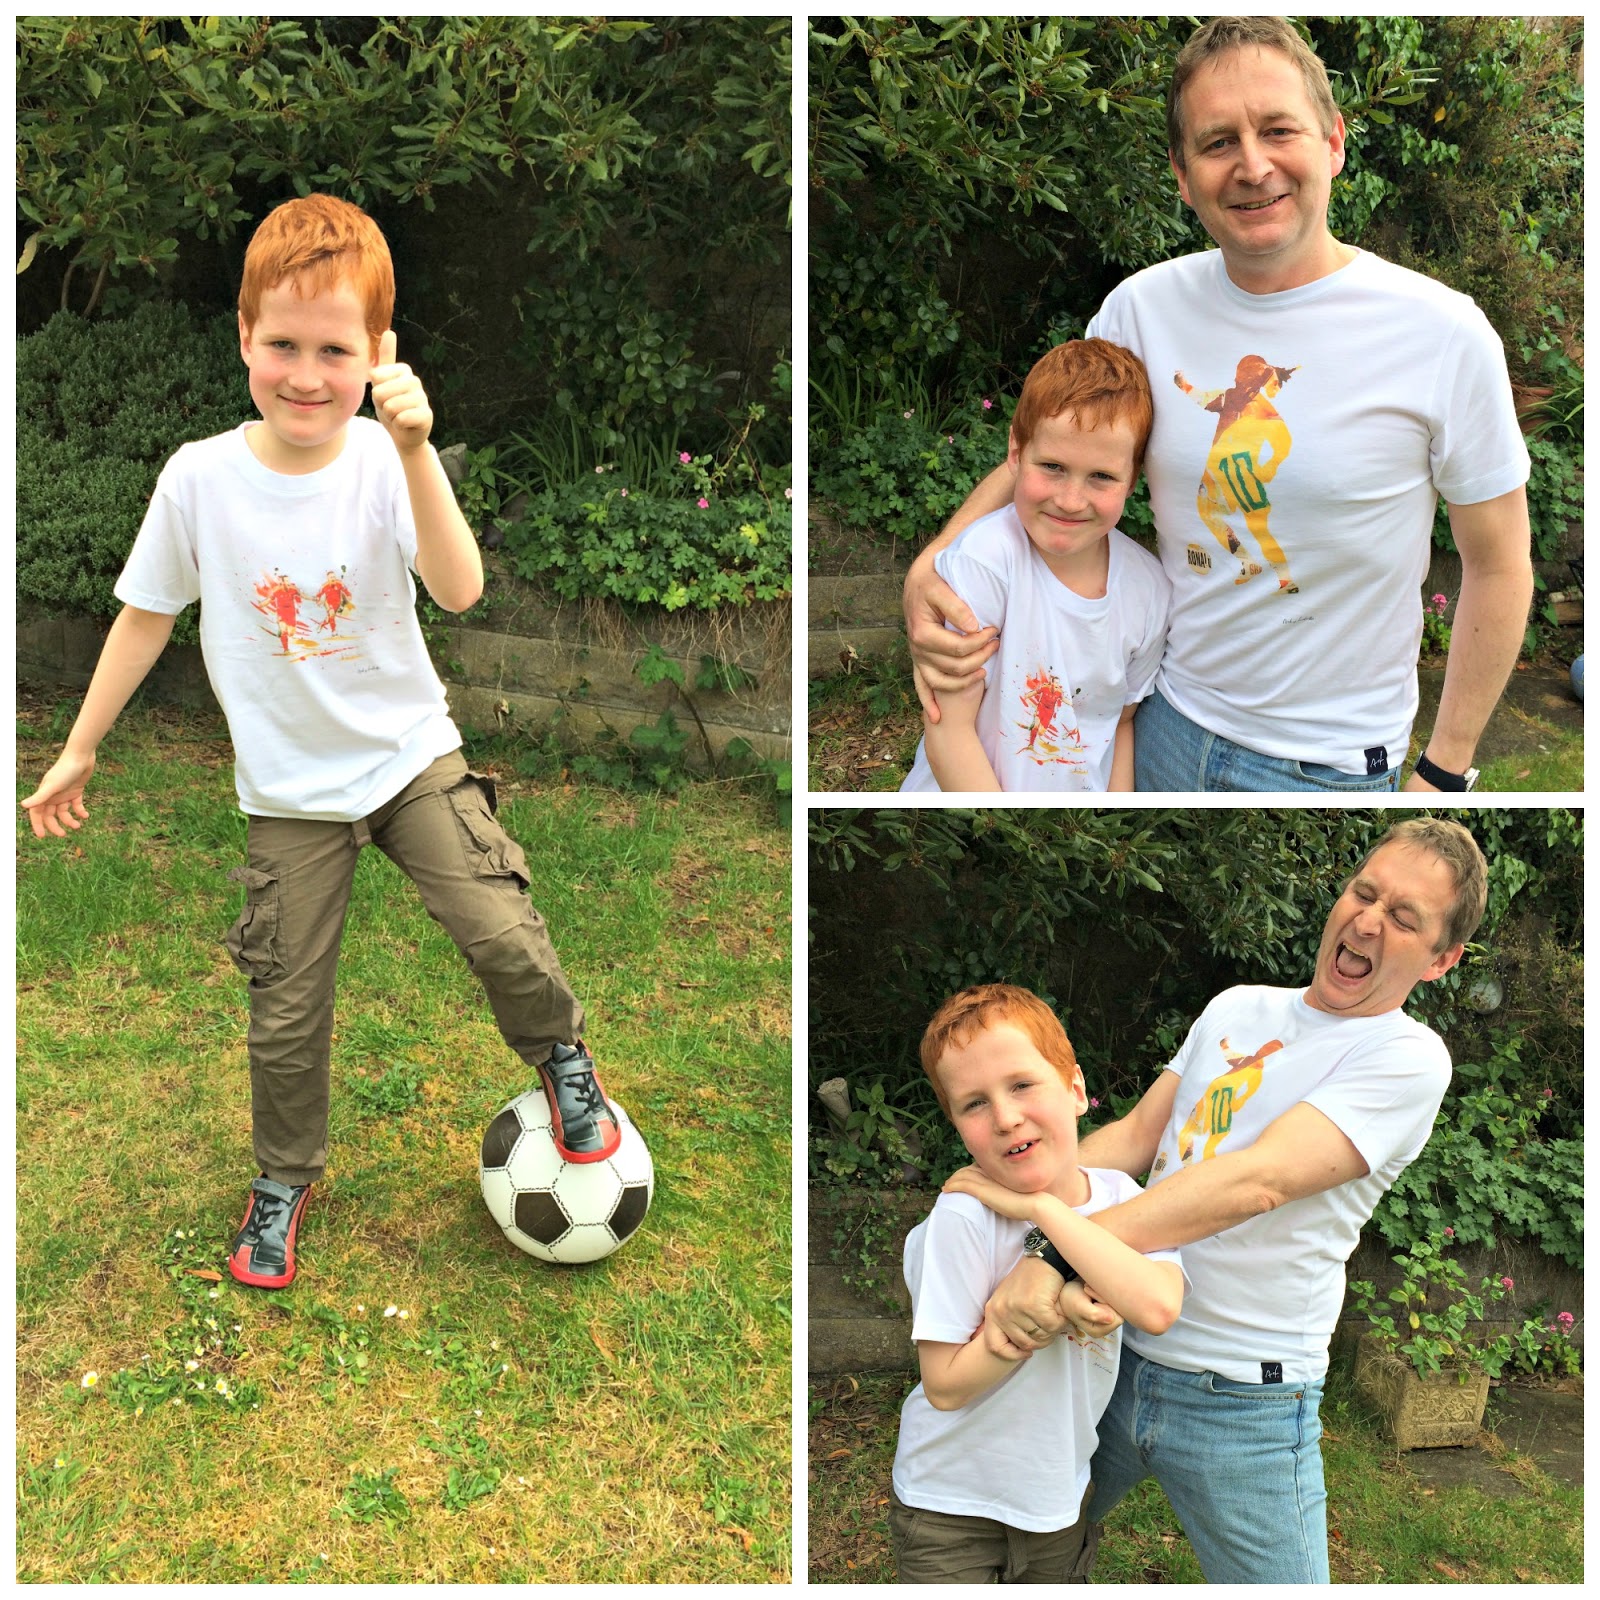 Mat and Ieuan Hobbis playing football in the back garden